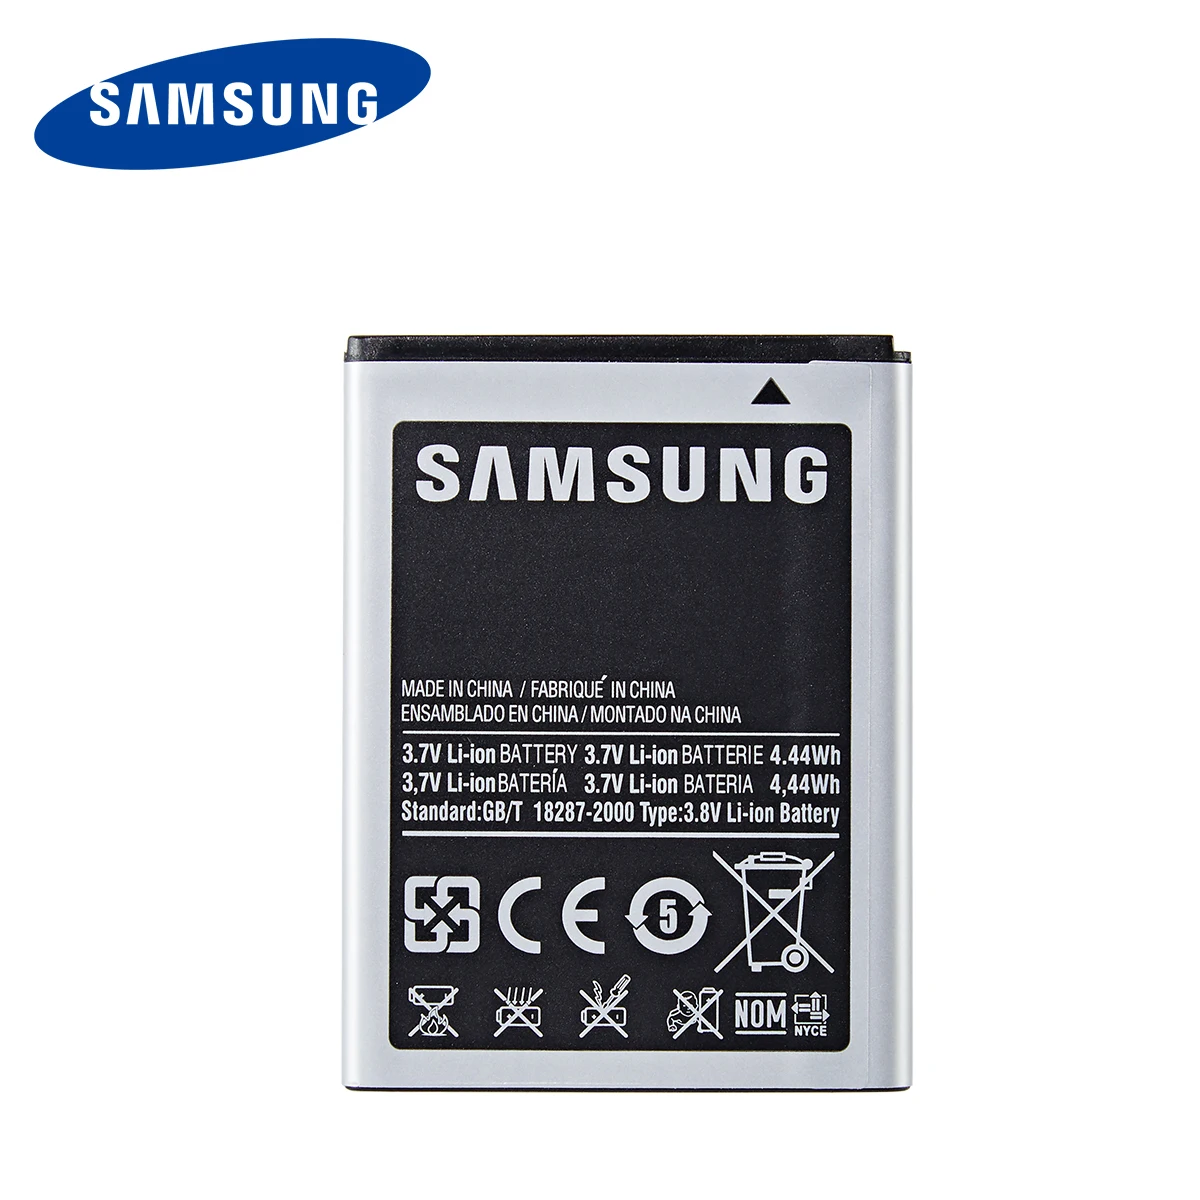 SAMSUNG Originalus EB454357VU 1200mAh Bateriją, Skirtą Samsung Galaxy Y S5360 Y Pro B5510 Wave S5380 S5368 Pocket S5300 Chat B5330 3